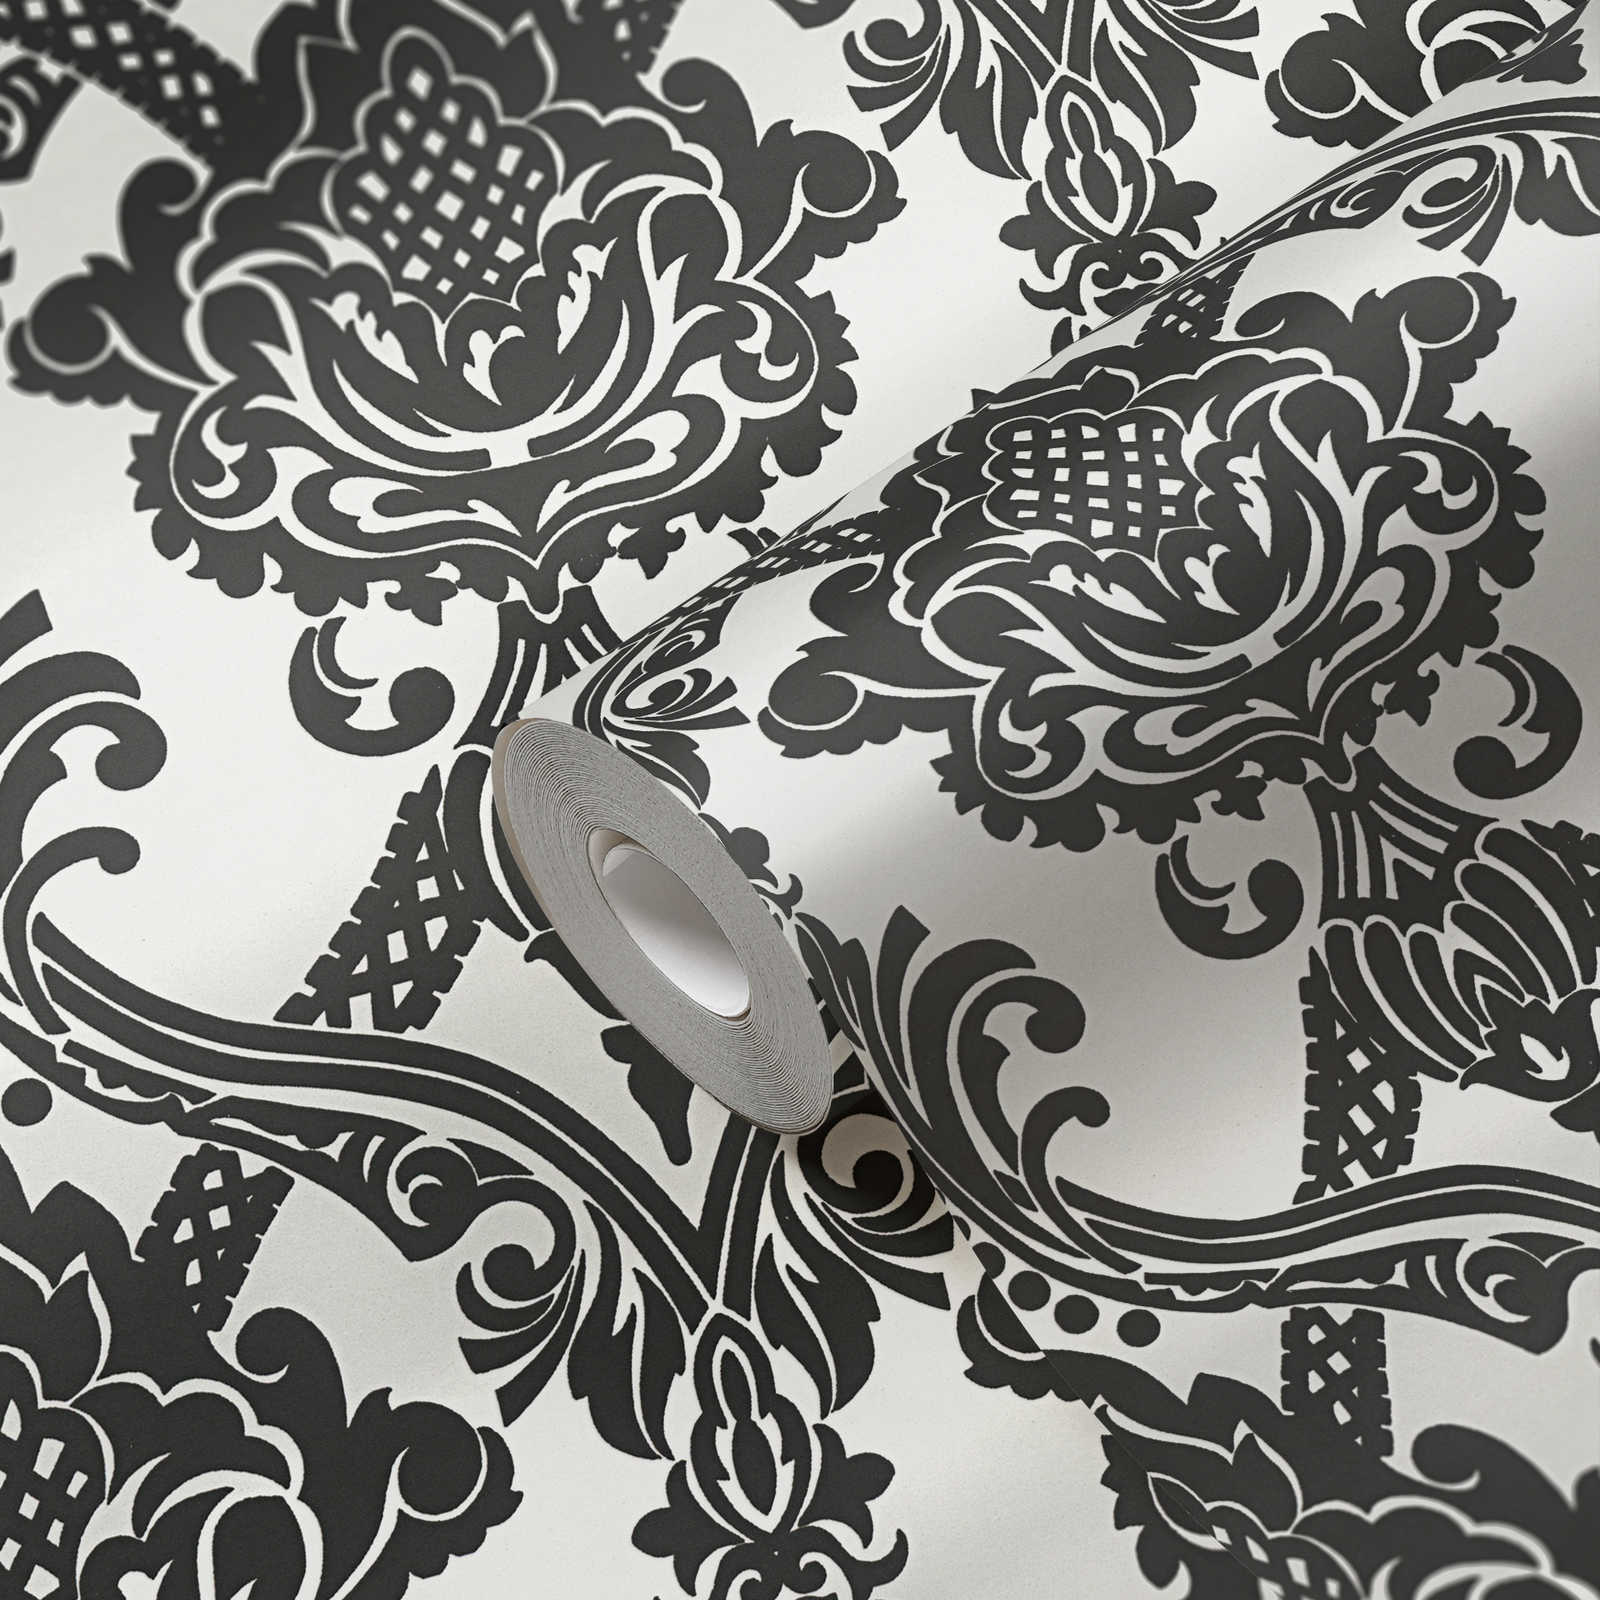             Metallic wallpaper baroque ornamental pattern in black and white
        